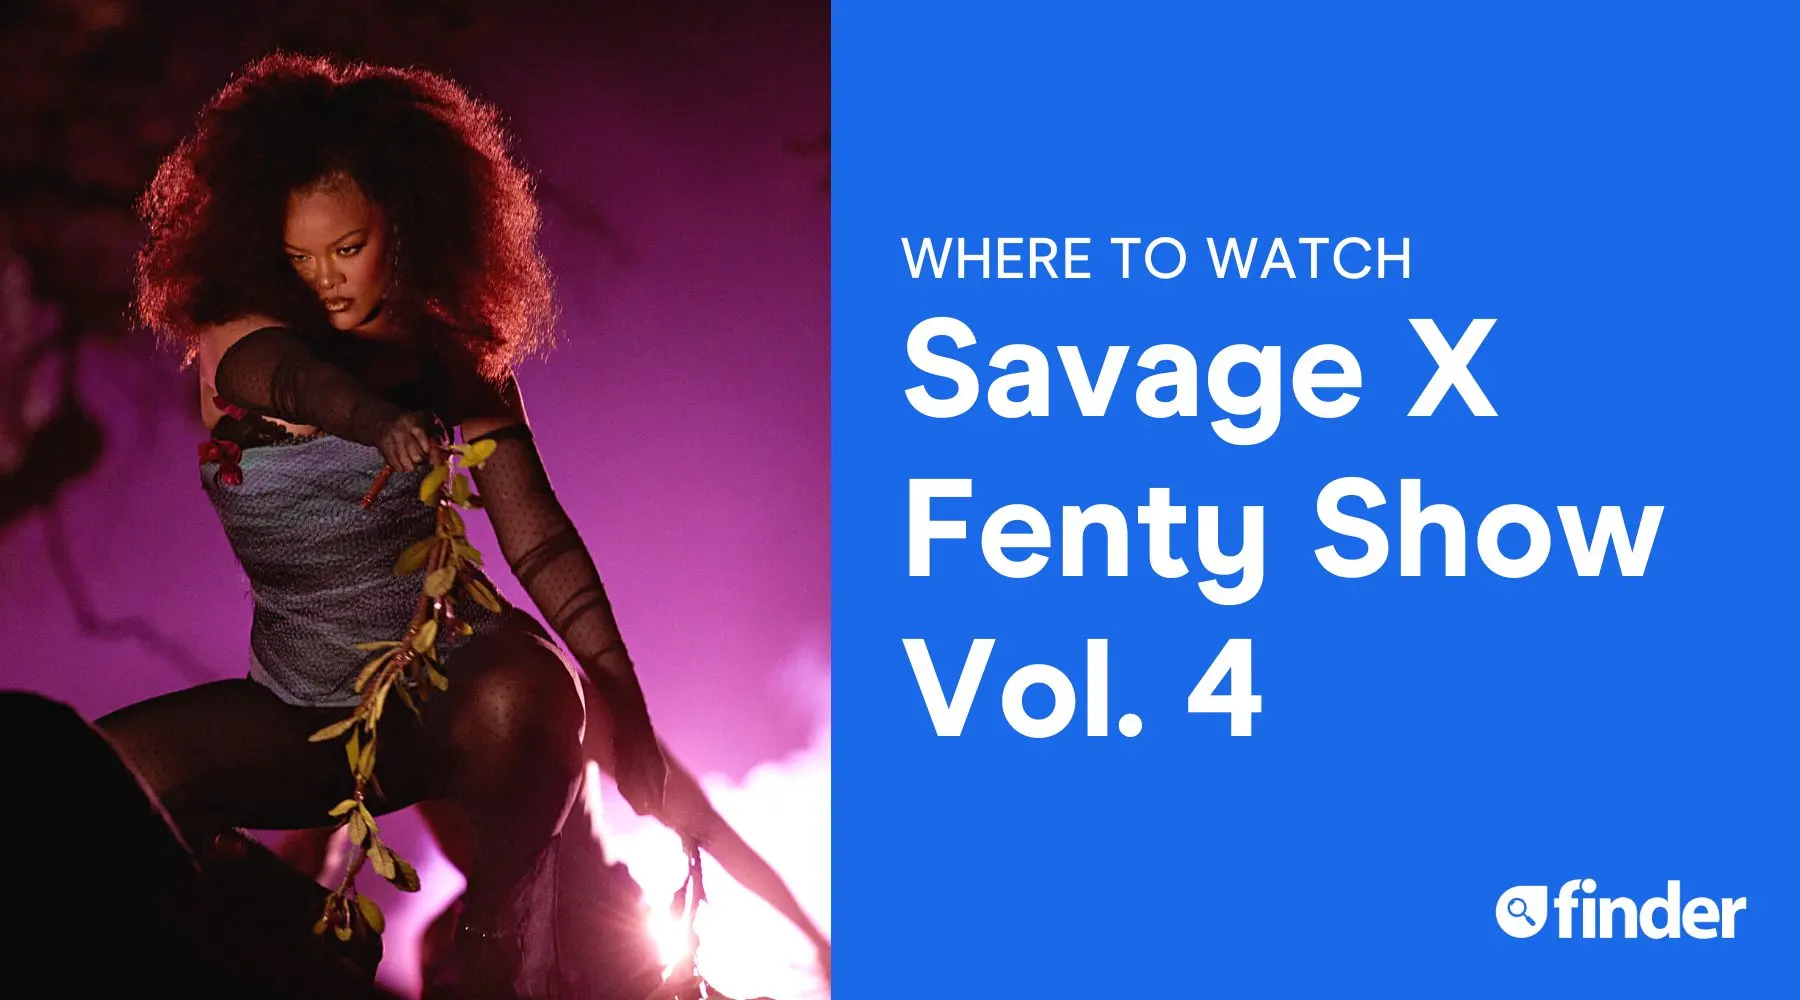 Shop Rihanna's Savage x Fenty Show As You Watch It